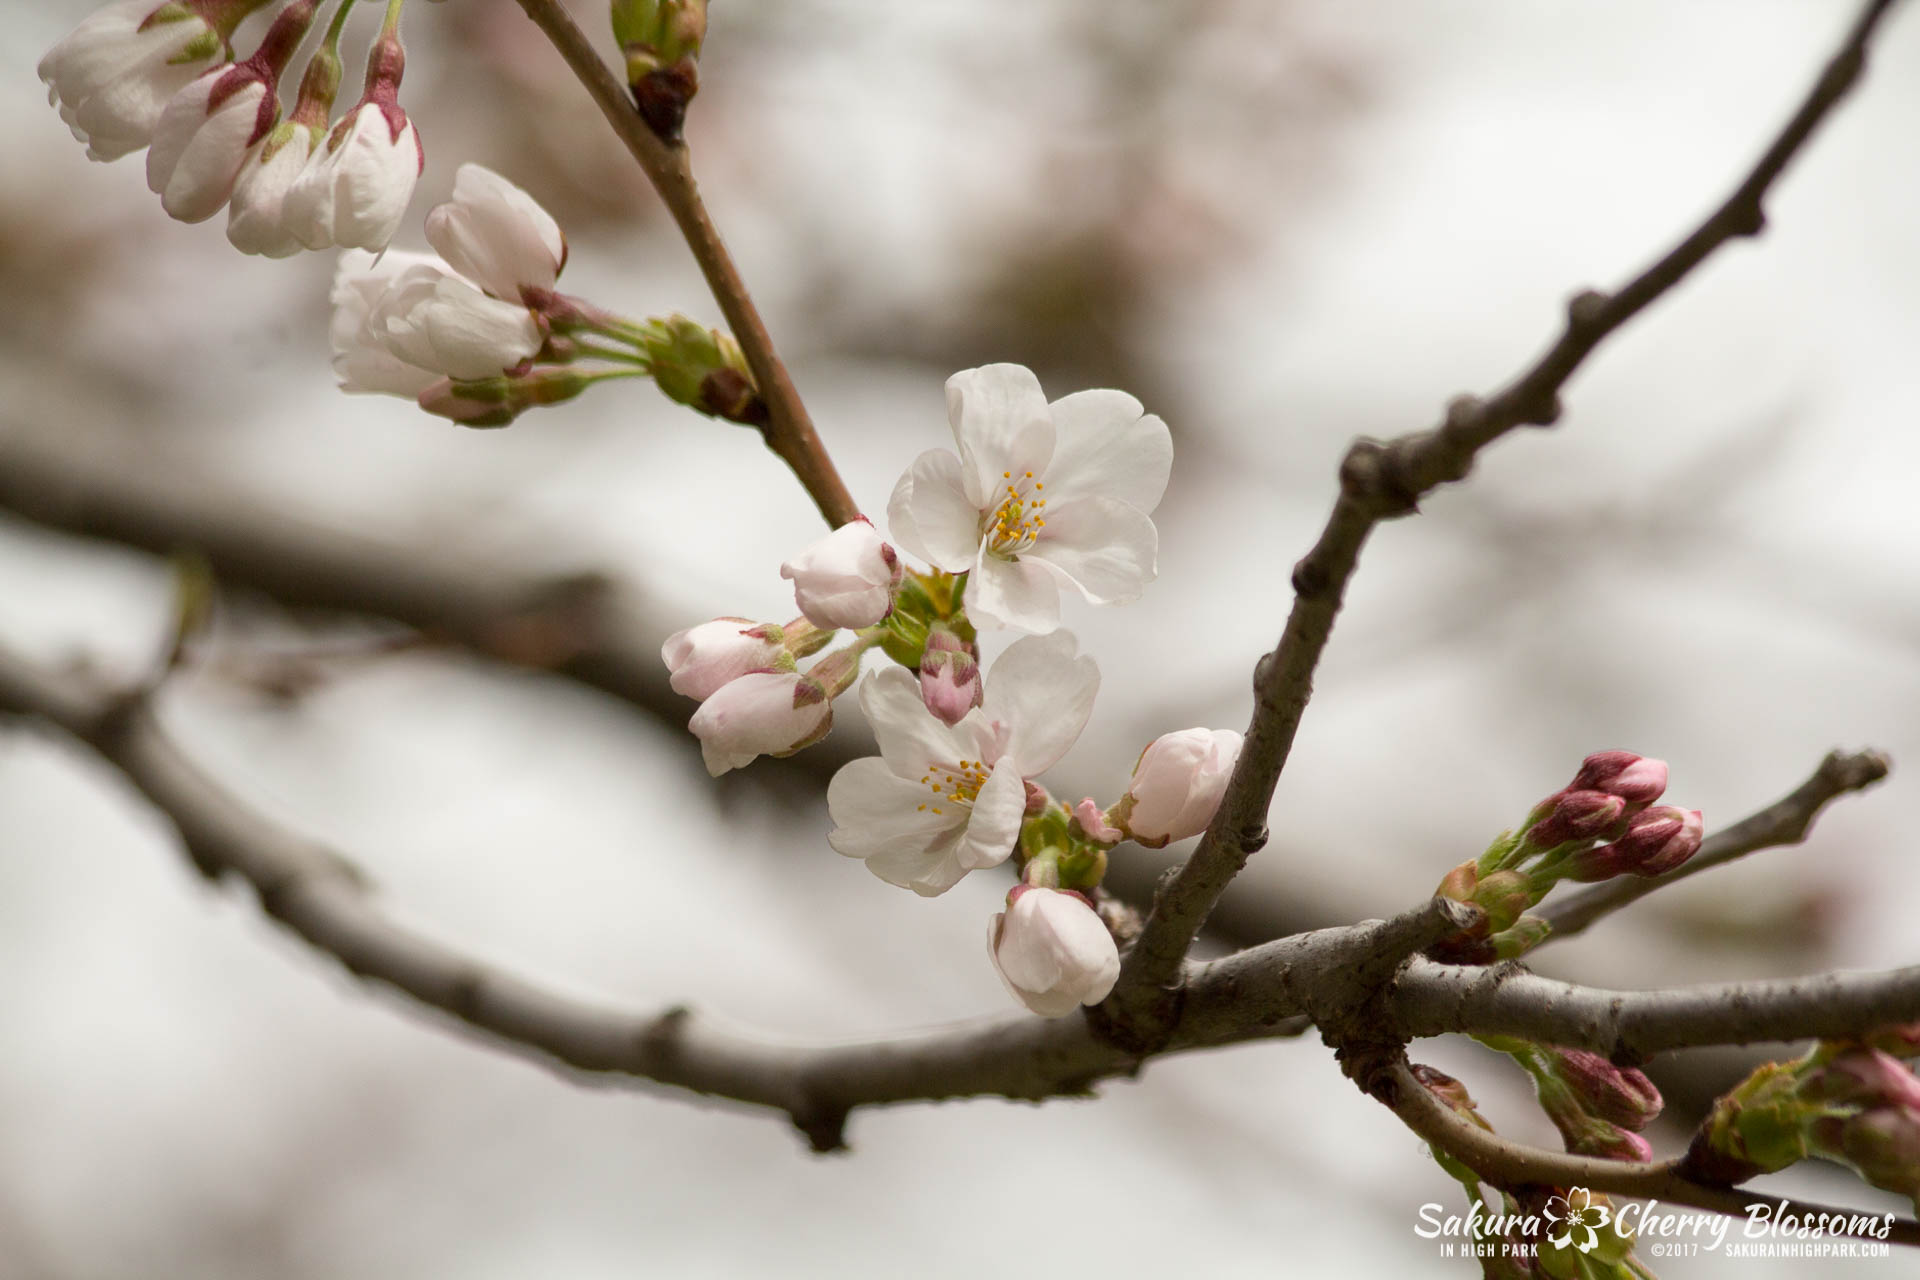 Sakura-Watch-April-21-2017-bloom-still-in-early-stages-92.jpg